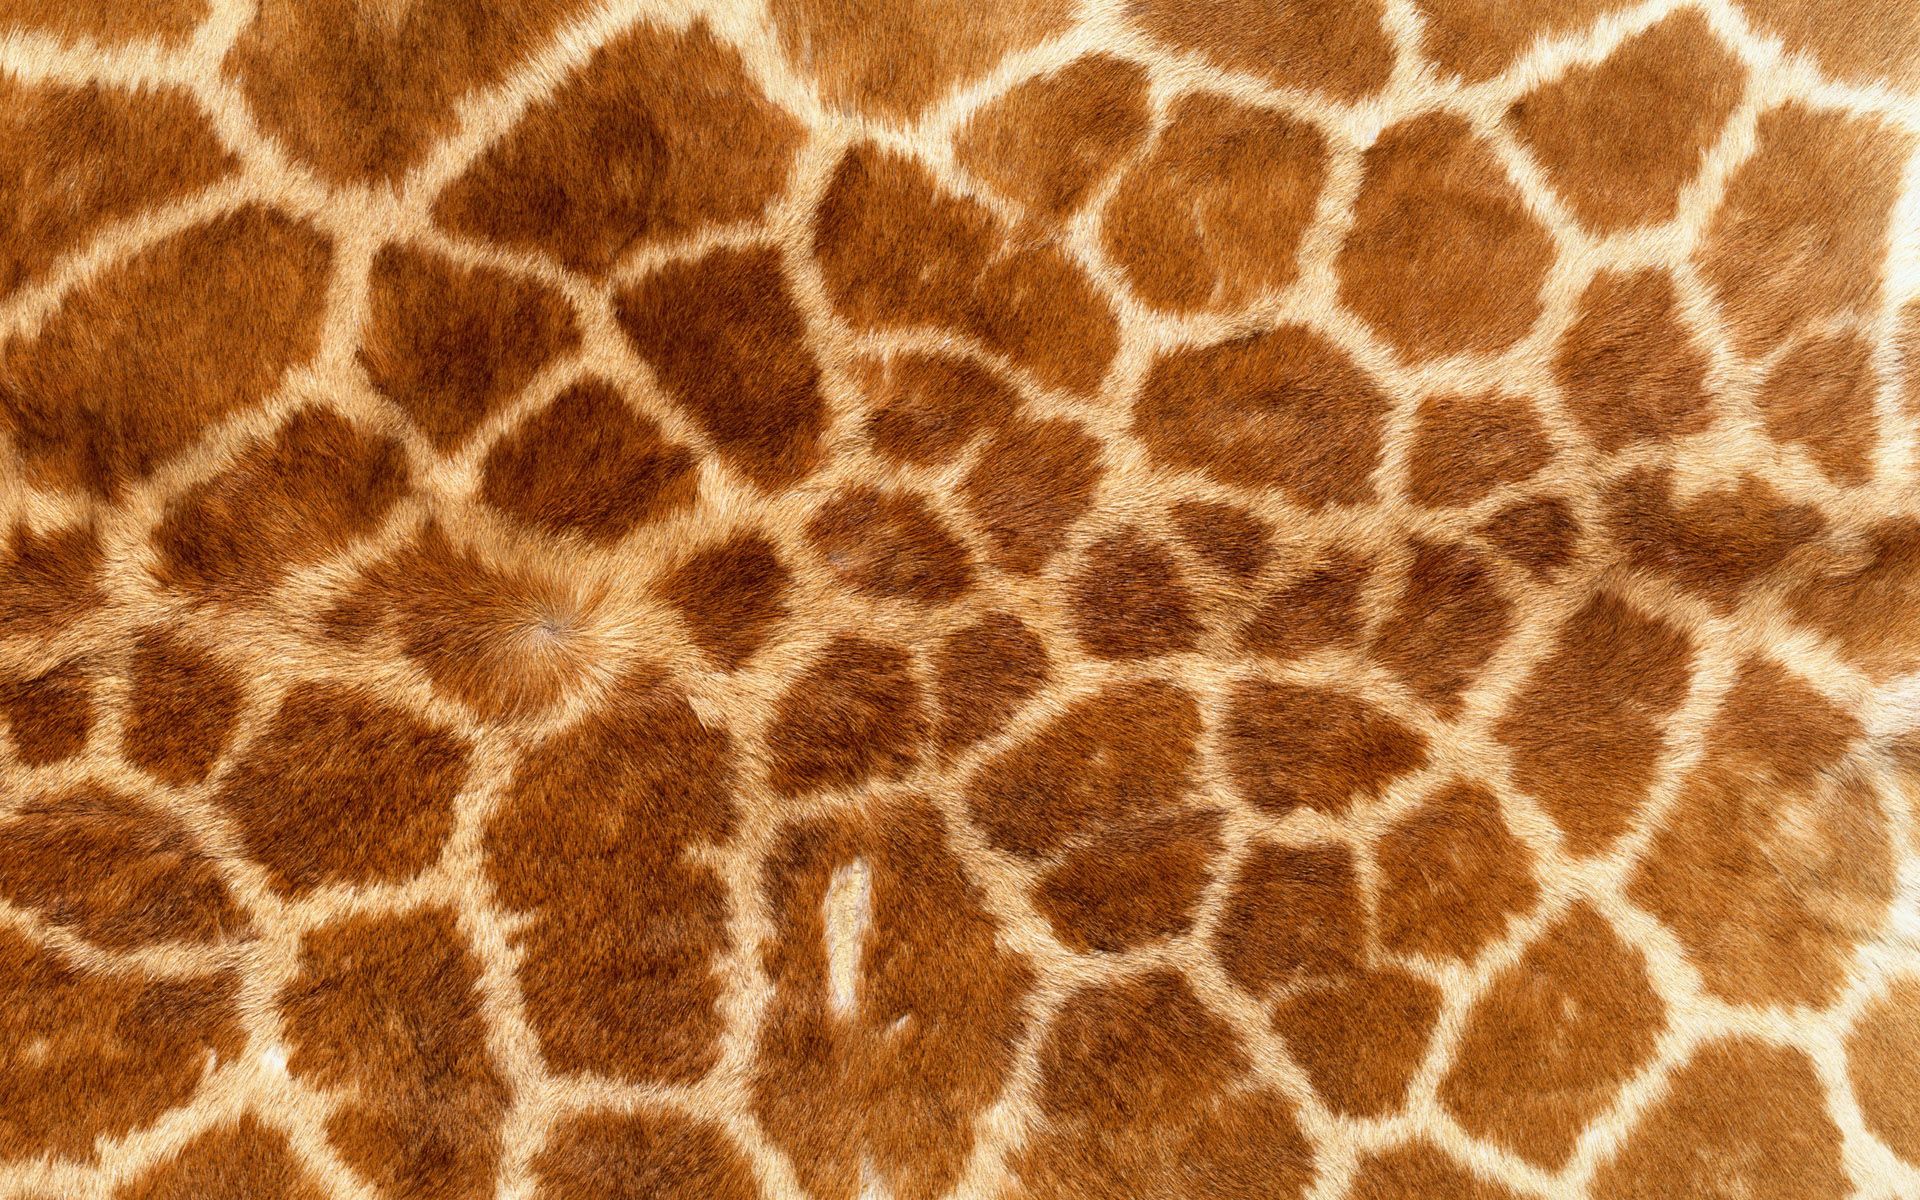 Giraffe Skin Texture | Patterns and textures we love | Pinterest ...